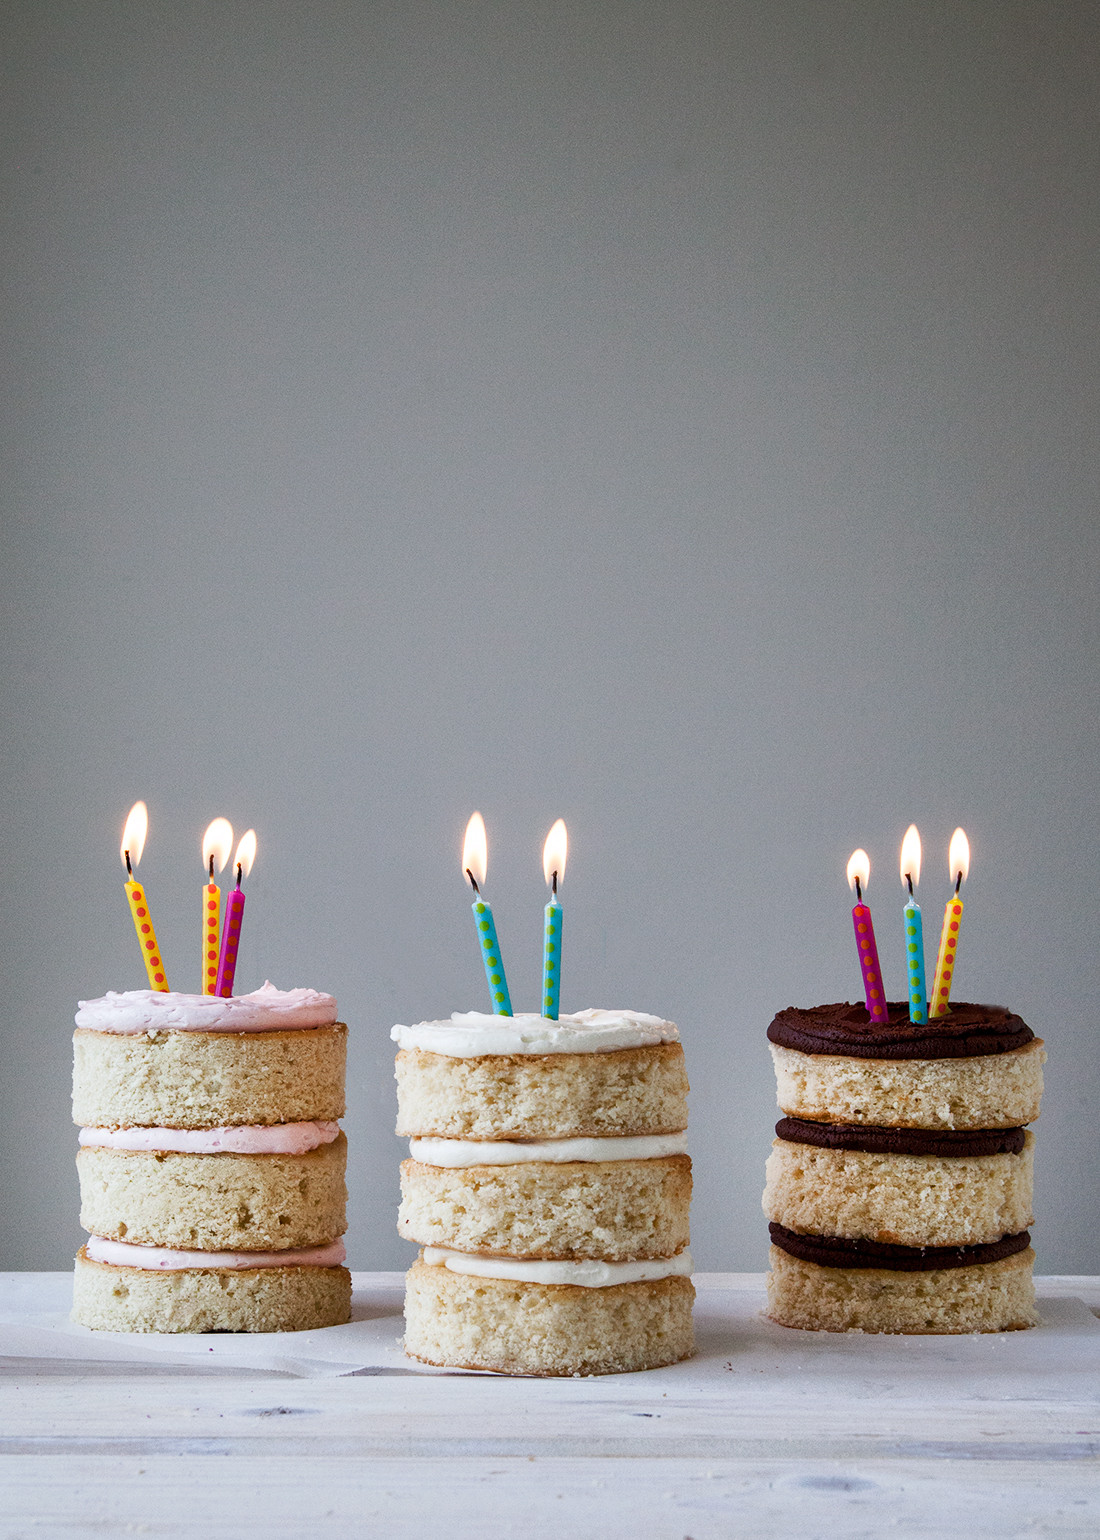 Best ideas about Mini Birthday Cake
. Save or Pin Neapolitan Mini Cakes — Style Sweet CA Now.